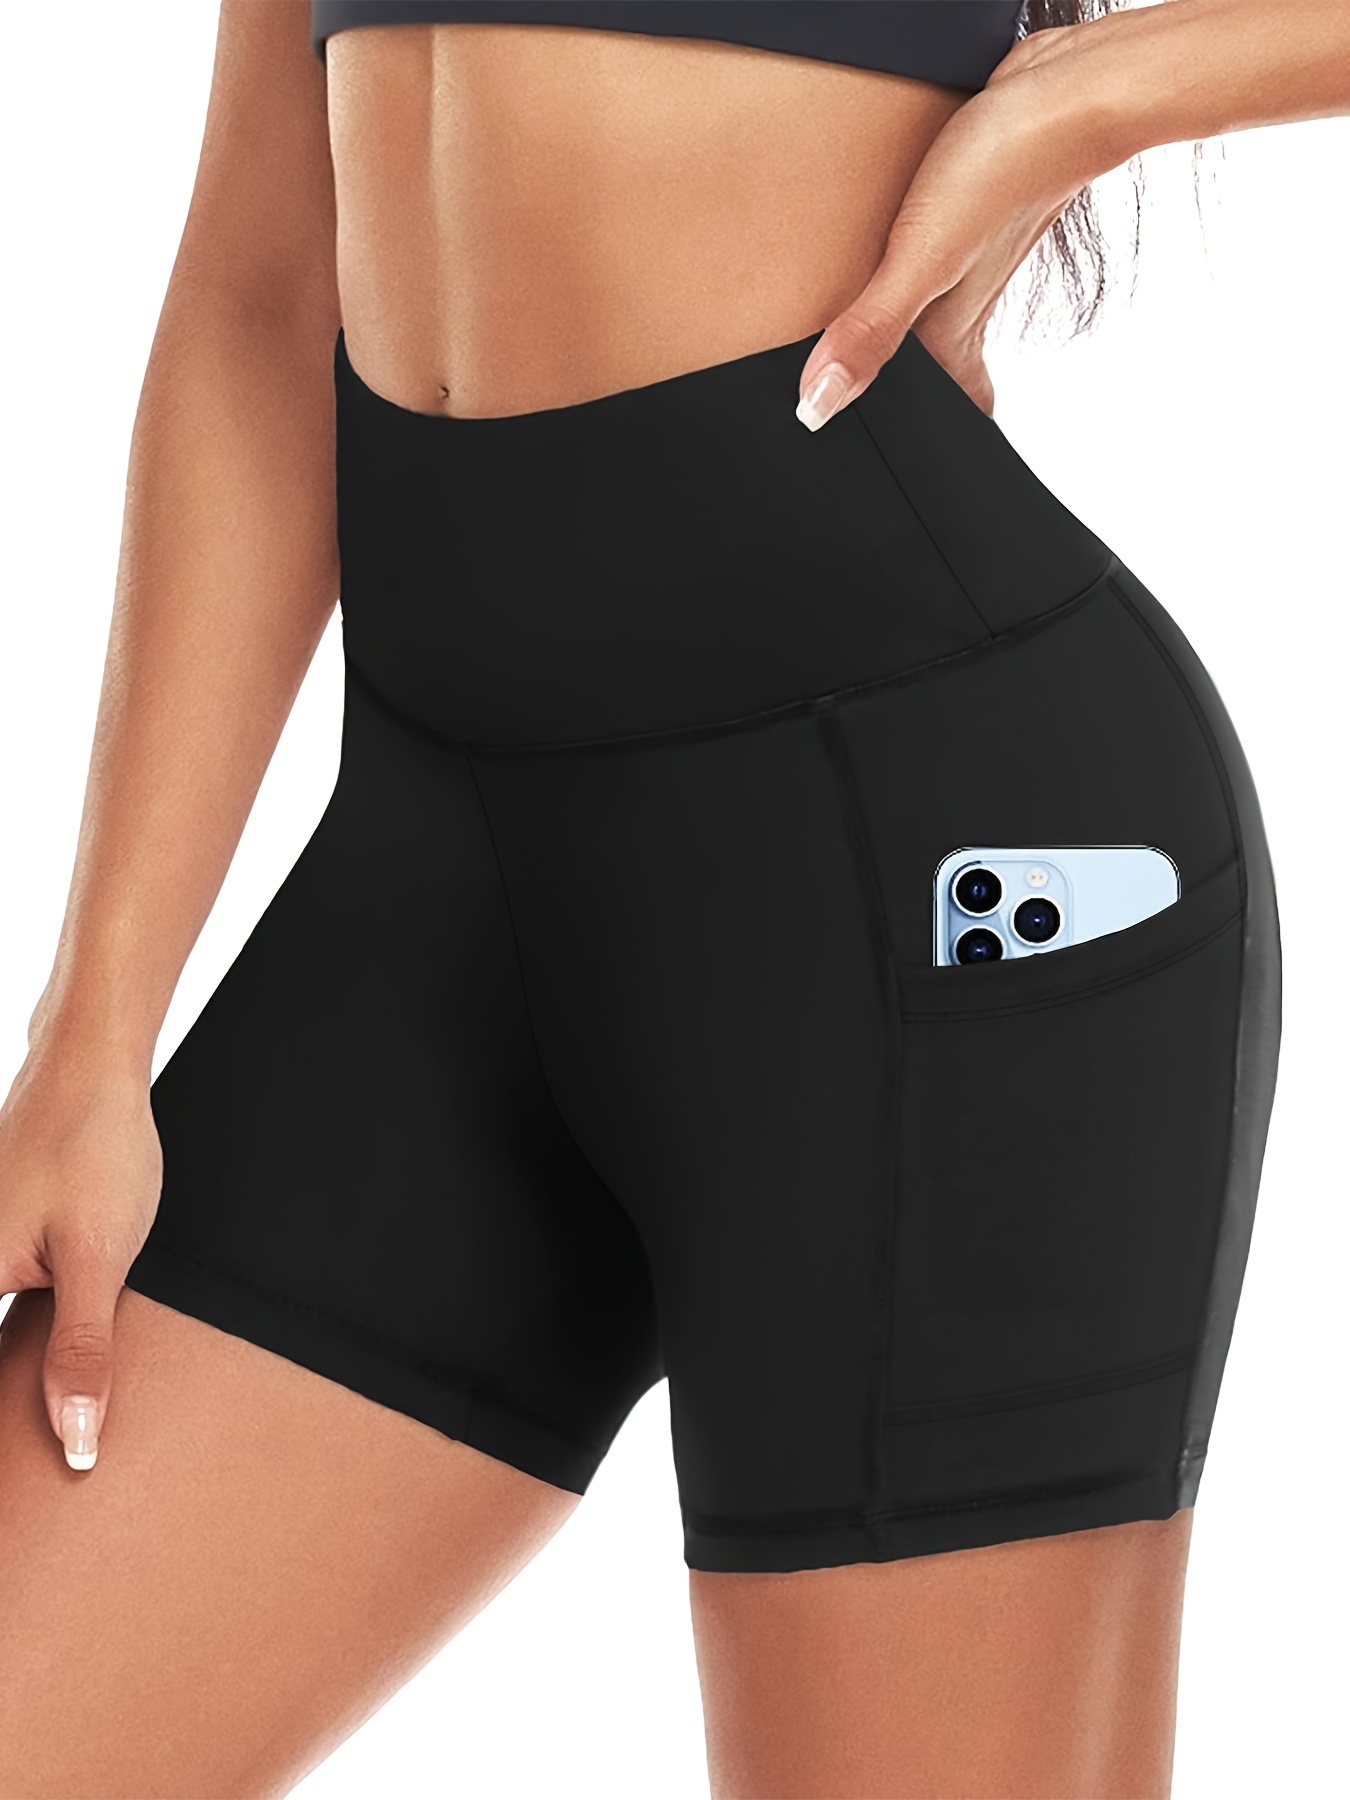 Women's Yoga Shorts Biker Shorts Workout Shorts Side Pockets with